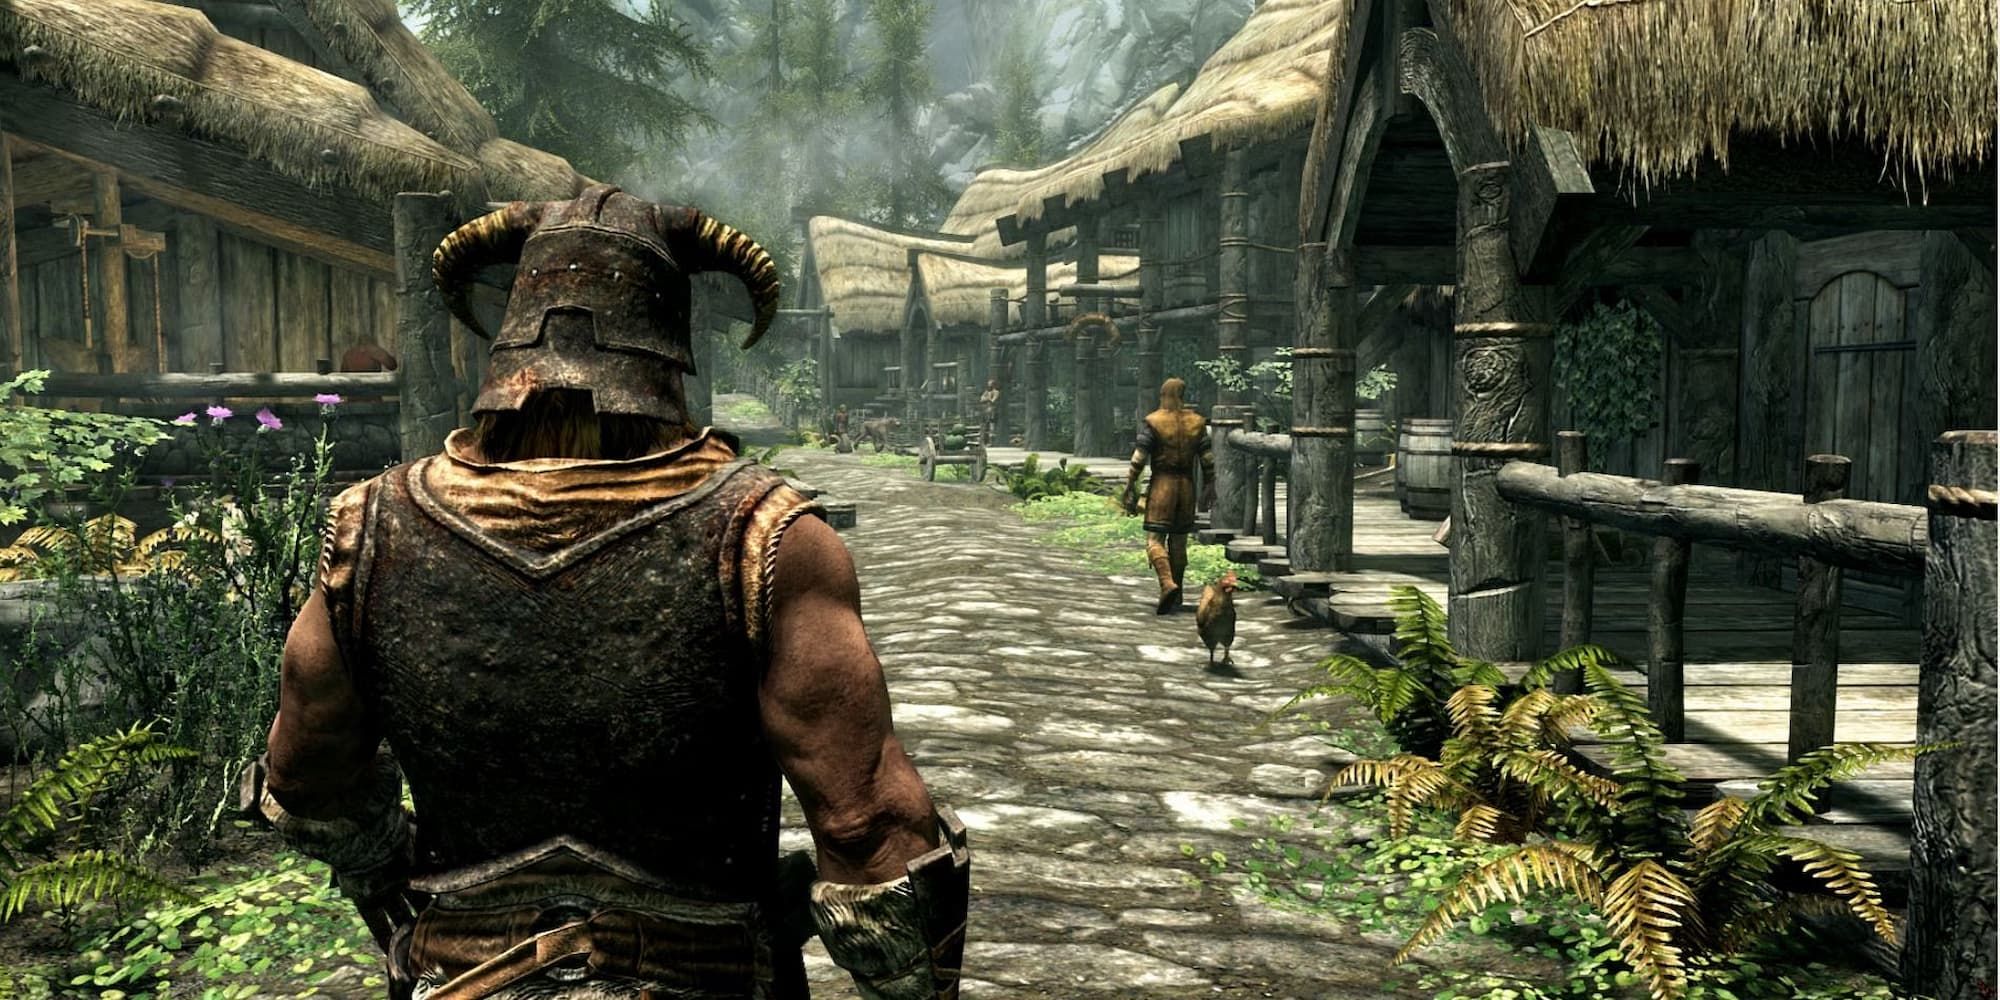 The Dragonborn walks through a village in The Elder Scrolls 5: Skyrim.